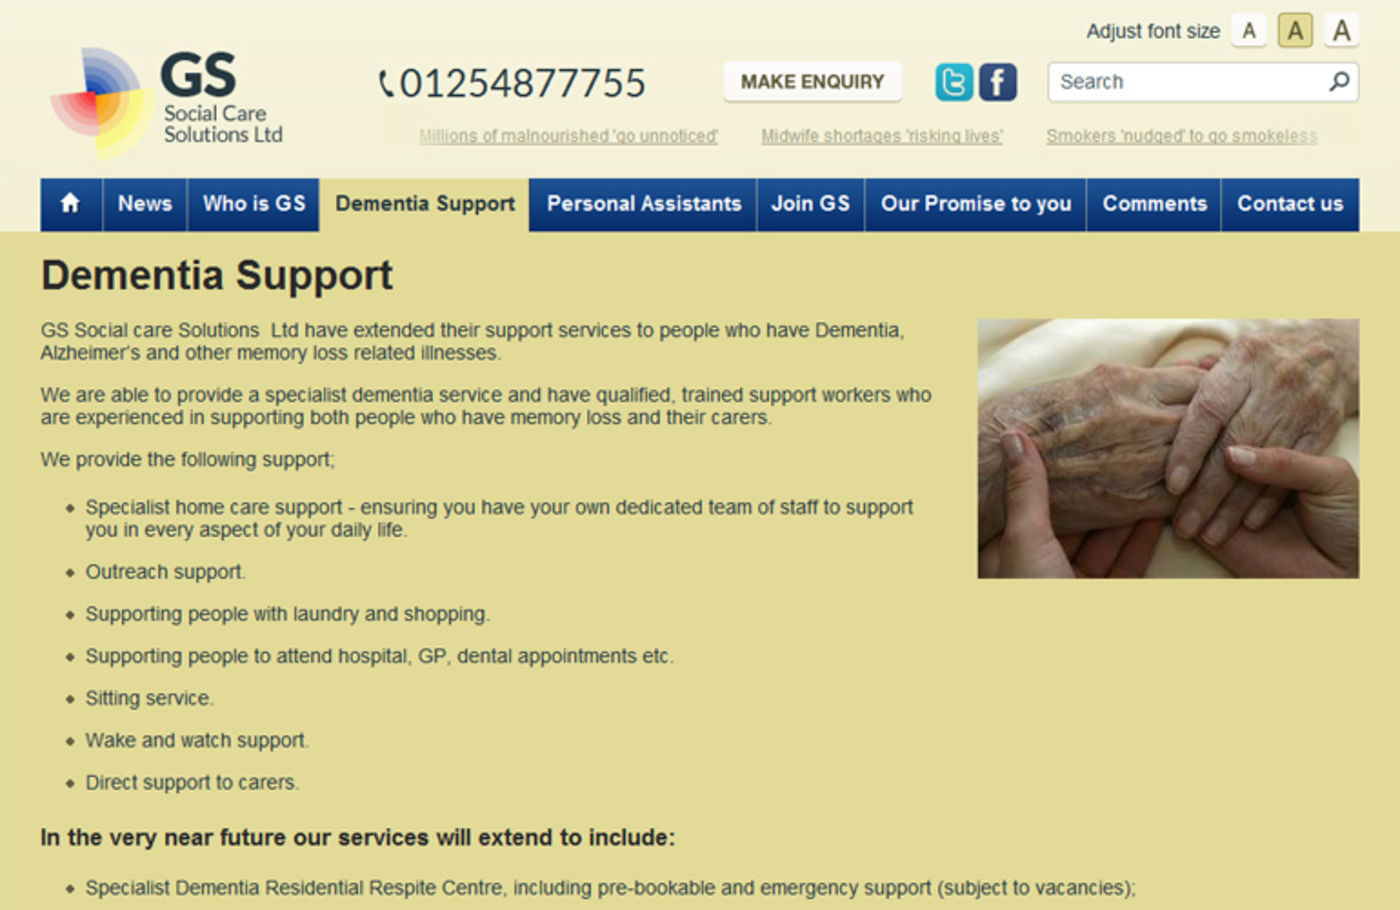 GS Social Care Solutions Ltd Regular page